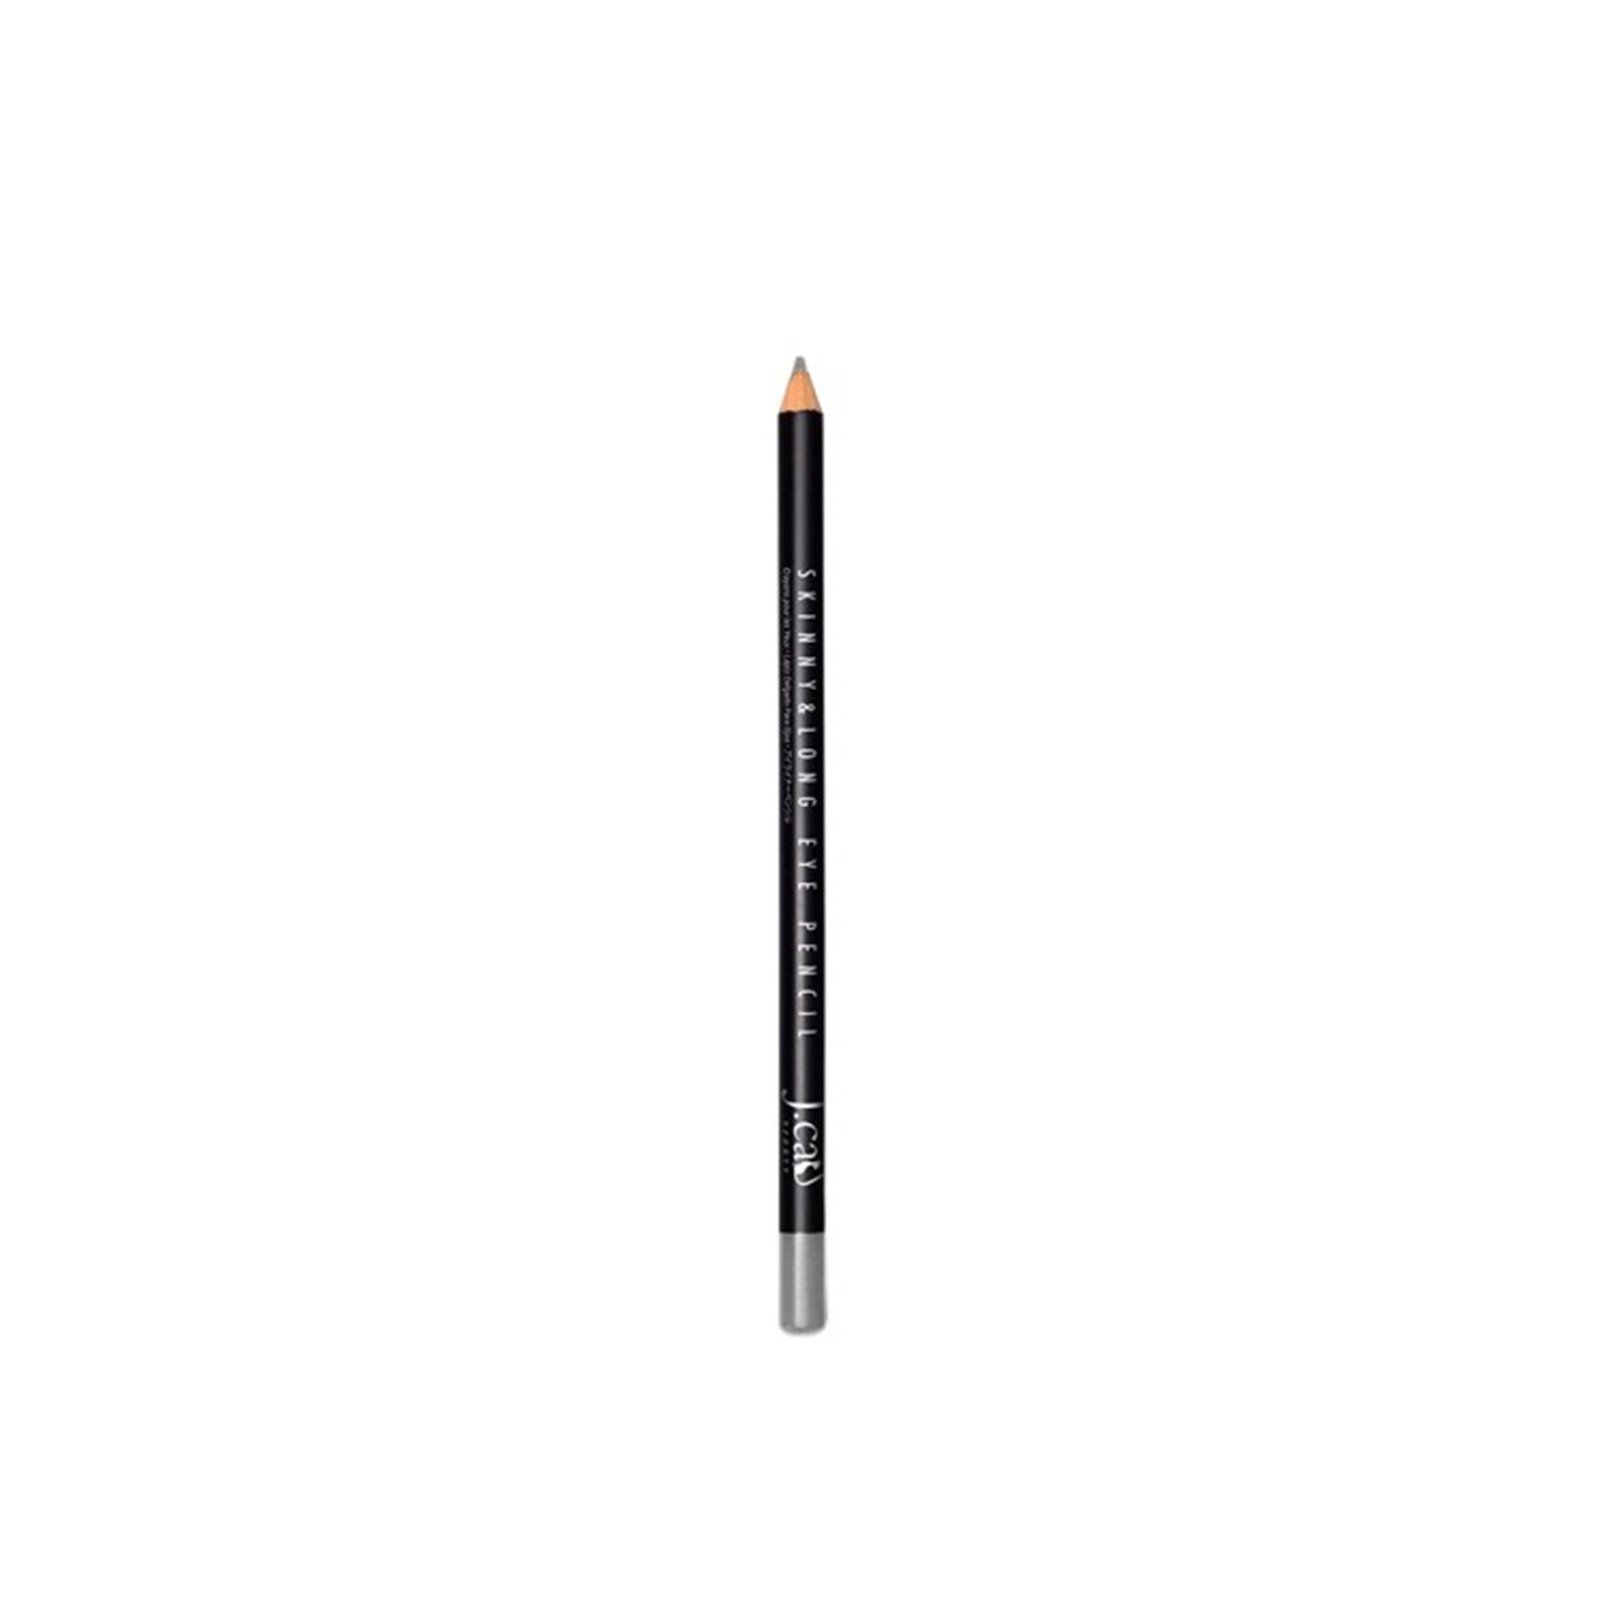 J.Cat Skinny & Long Eye Pencil 111 Ash Silver 2g